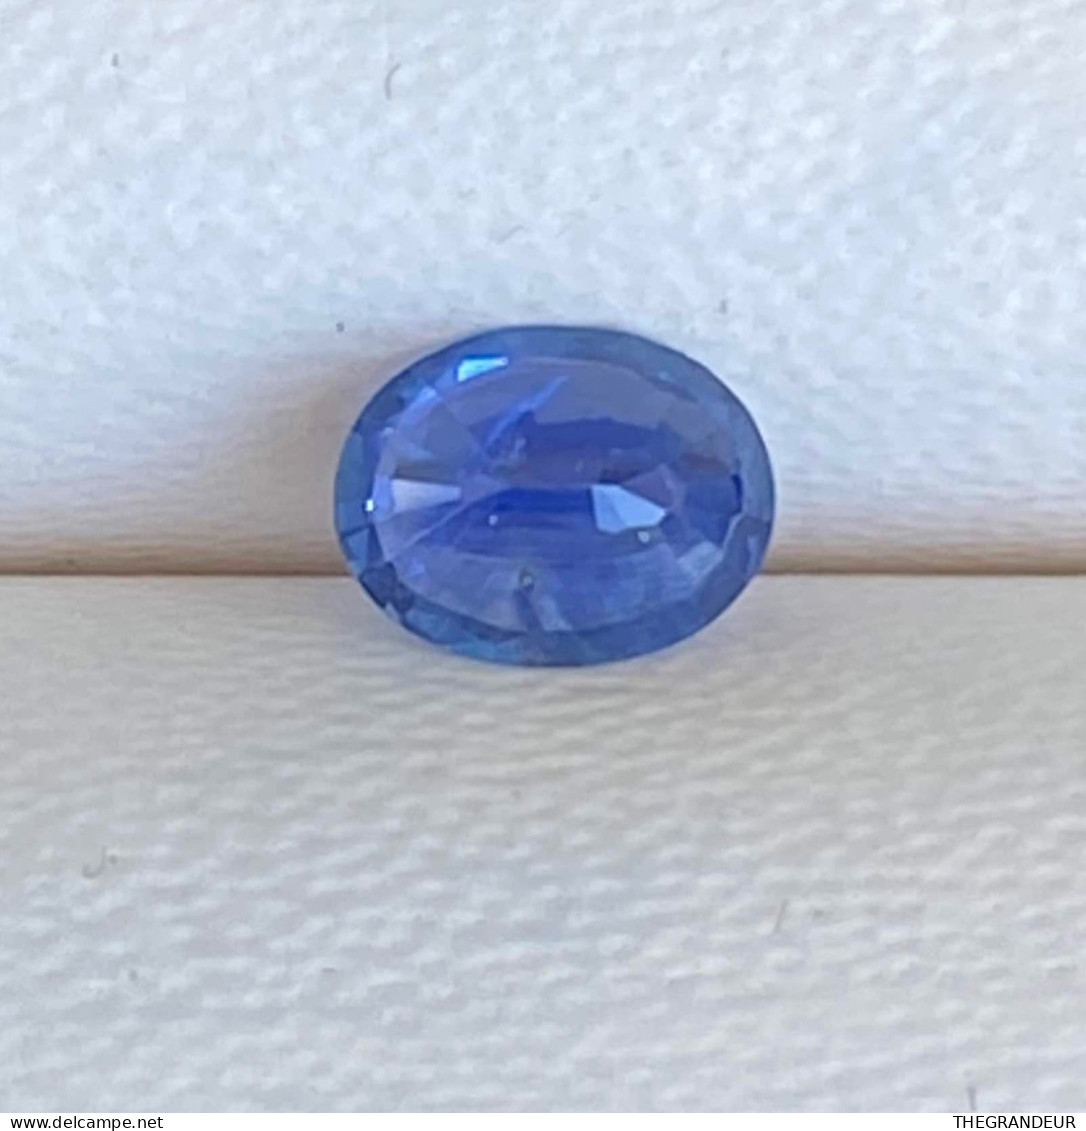 Natural Blue Sapphire Oval Cut 0.76 Carat From Sri Lanka - Zaffiro